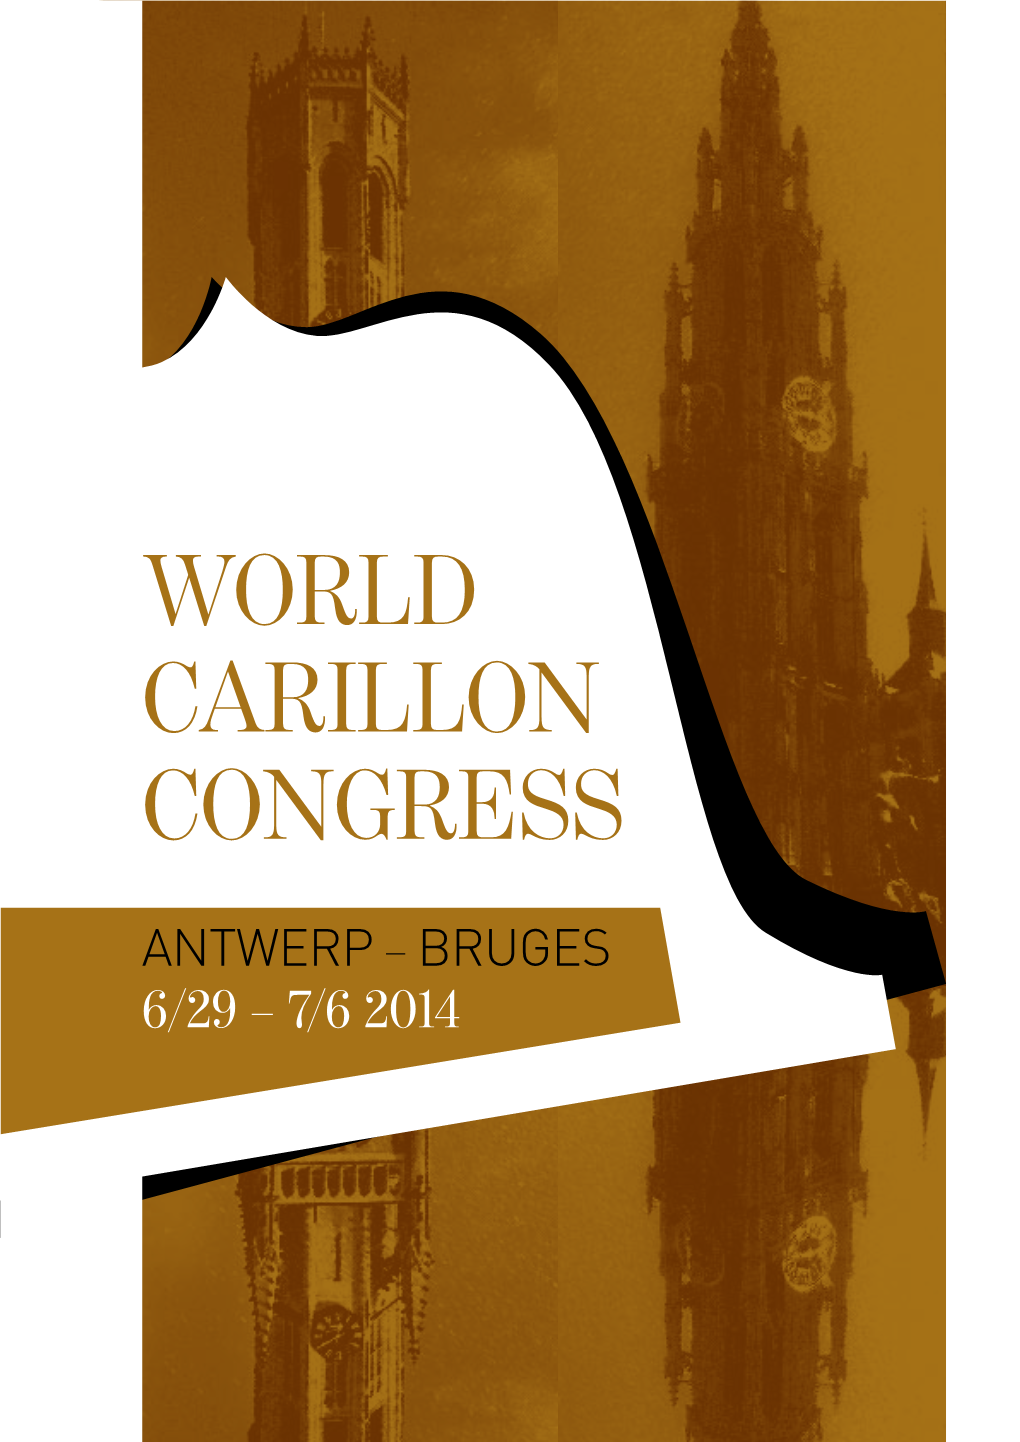 World Carillon Congress Antwerp – Bruges 6/29 – 7/6 2014 Protective Committee World Carillon Congress Antwerp/Bruges 2014